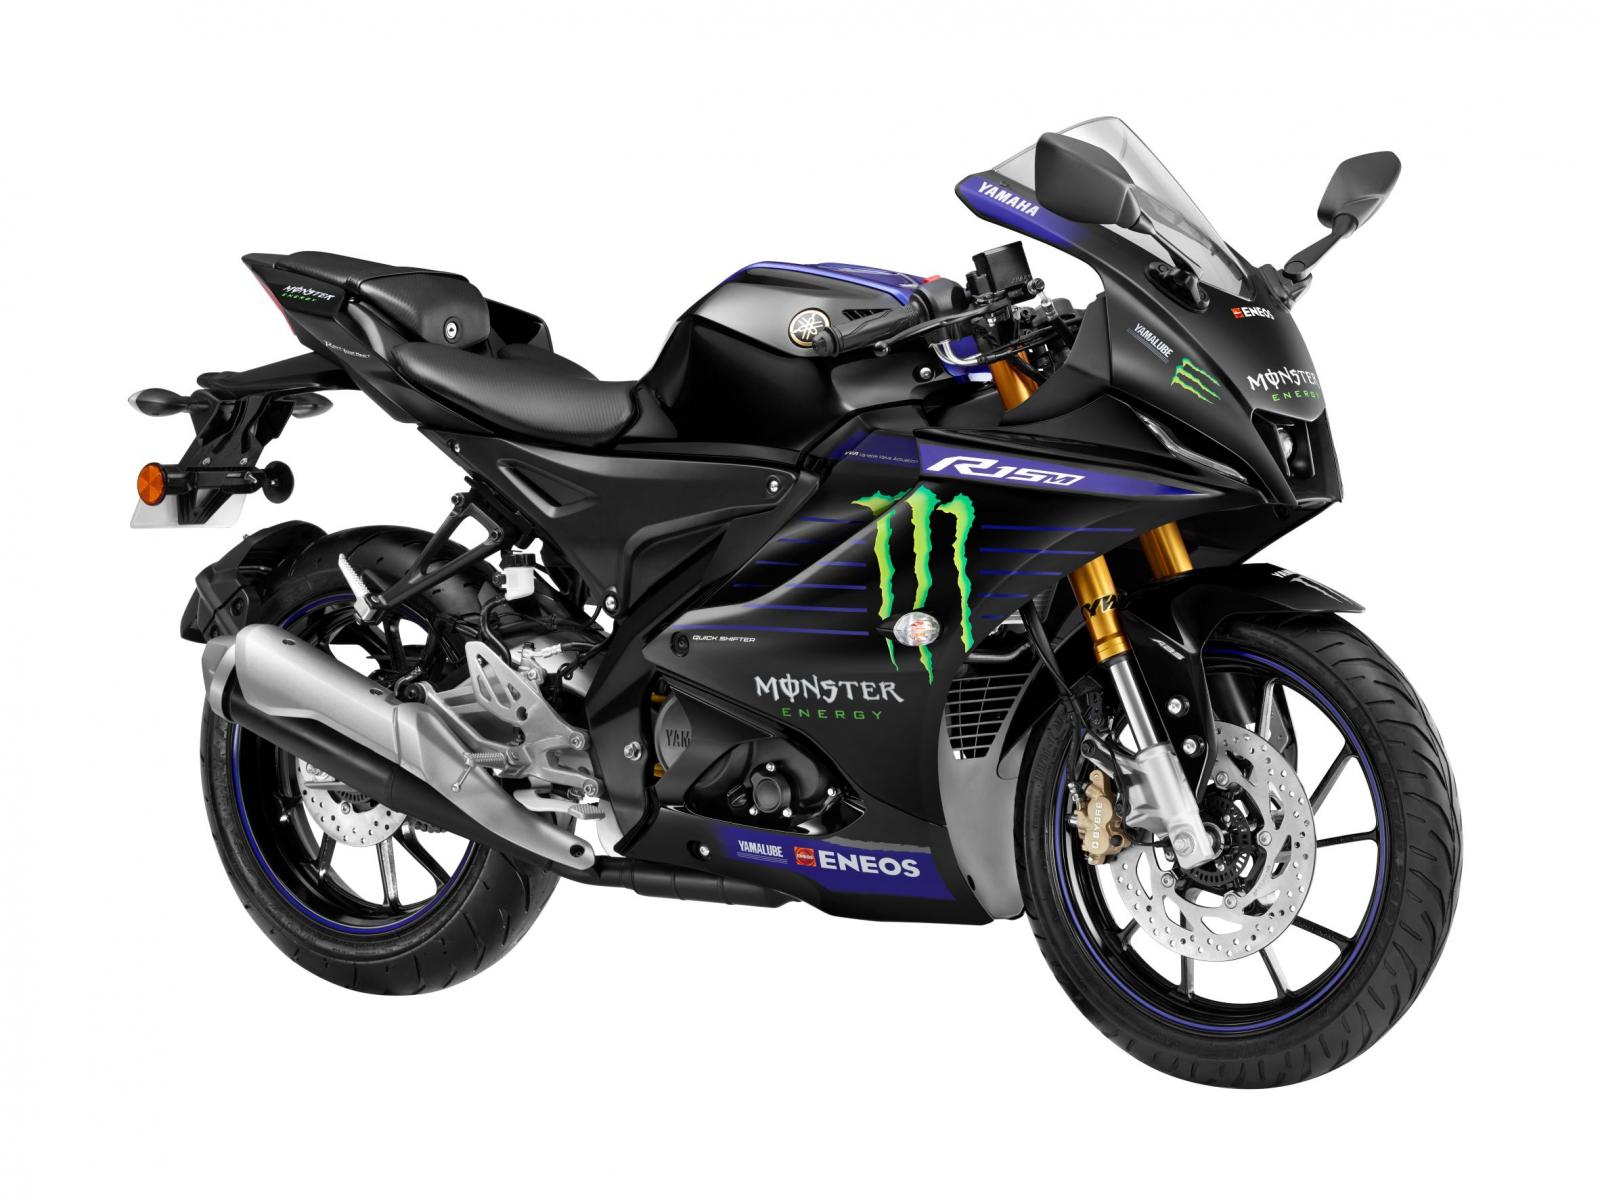 Yamaha Launches MotoGP Edition of R15, MT15, Aerox & RayZR